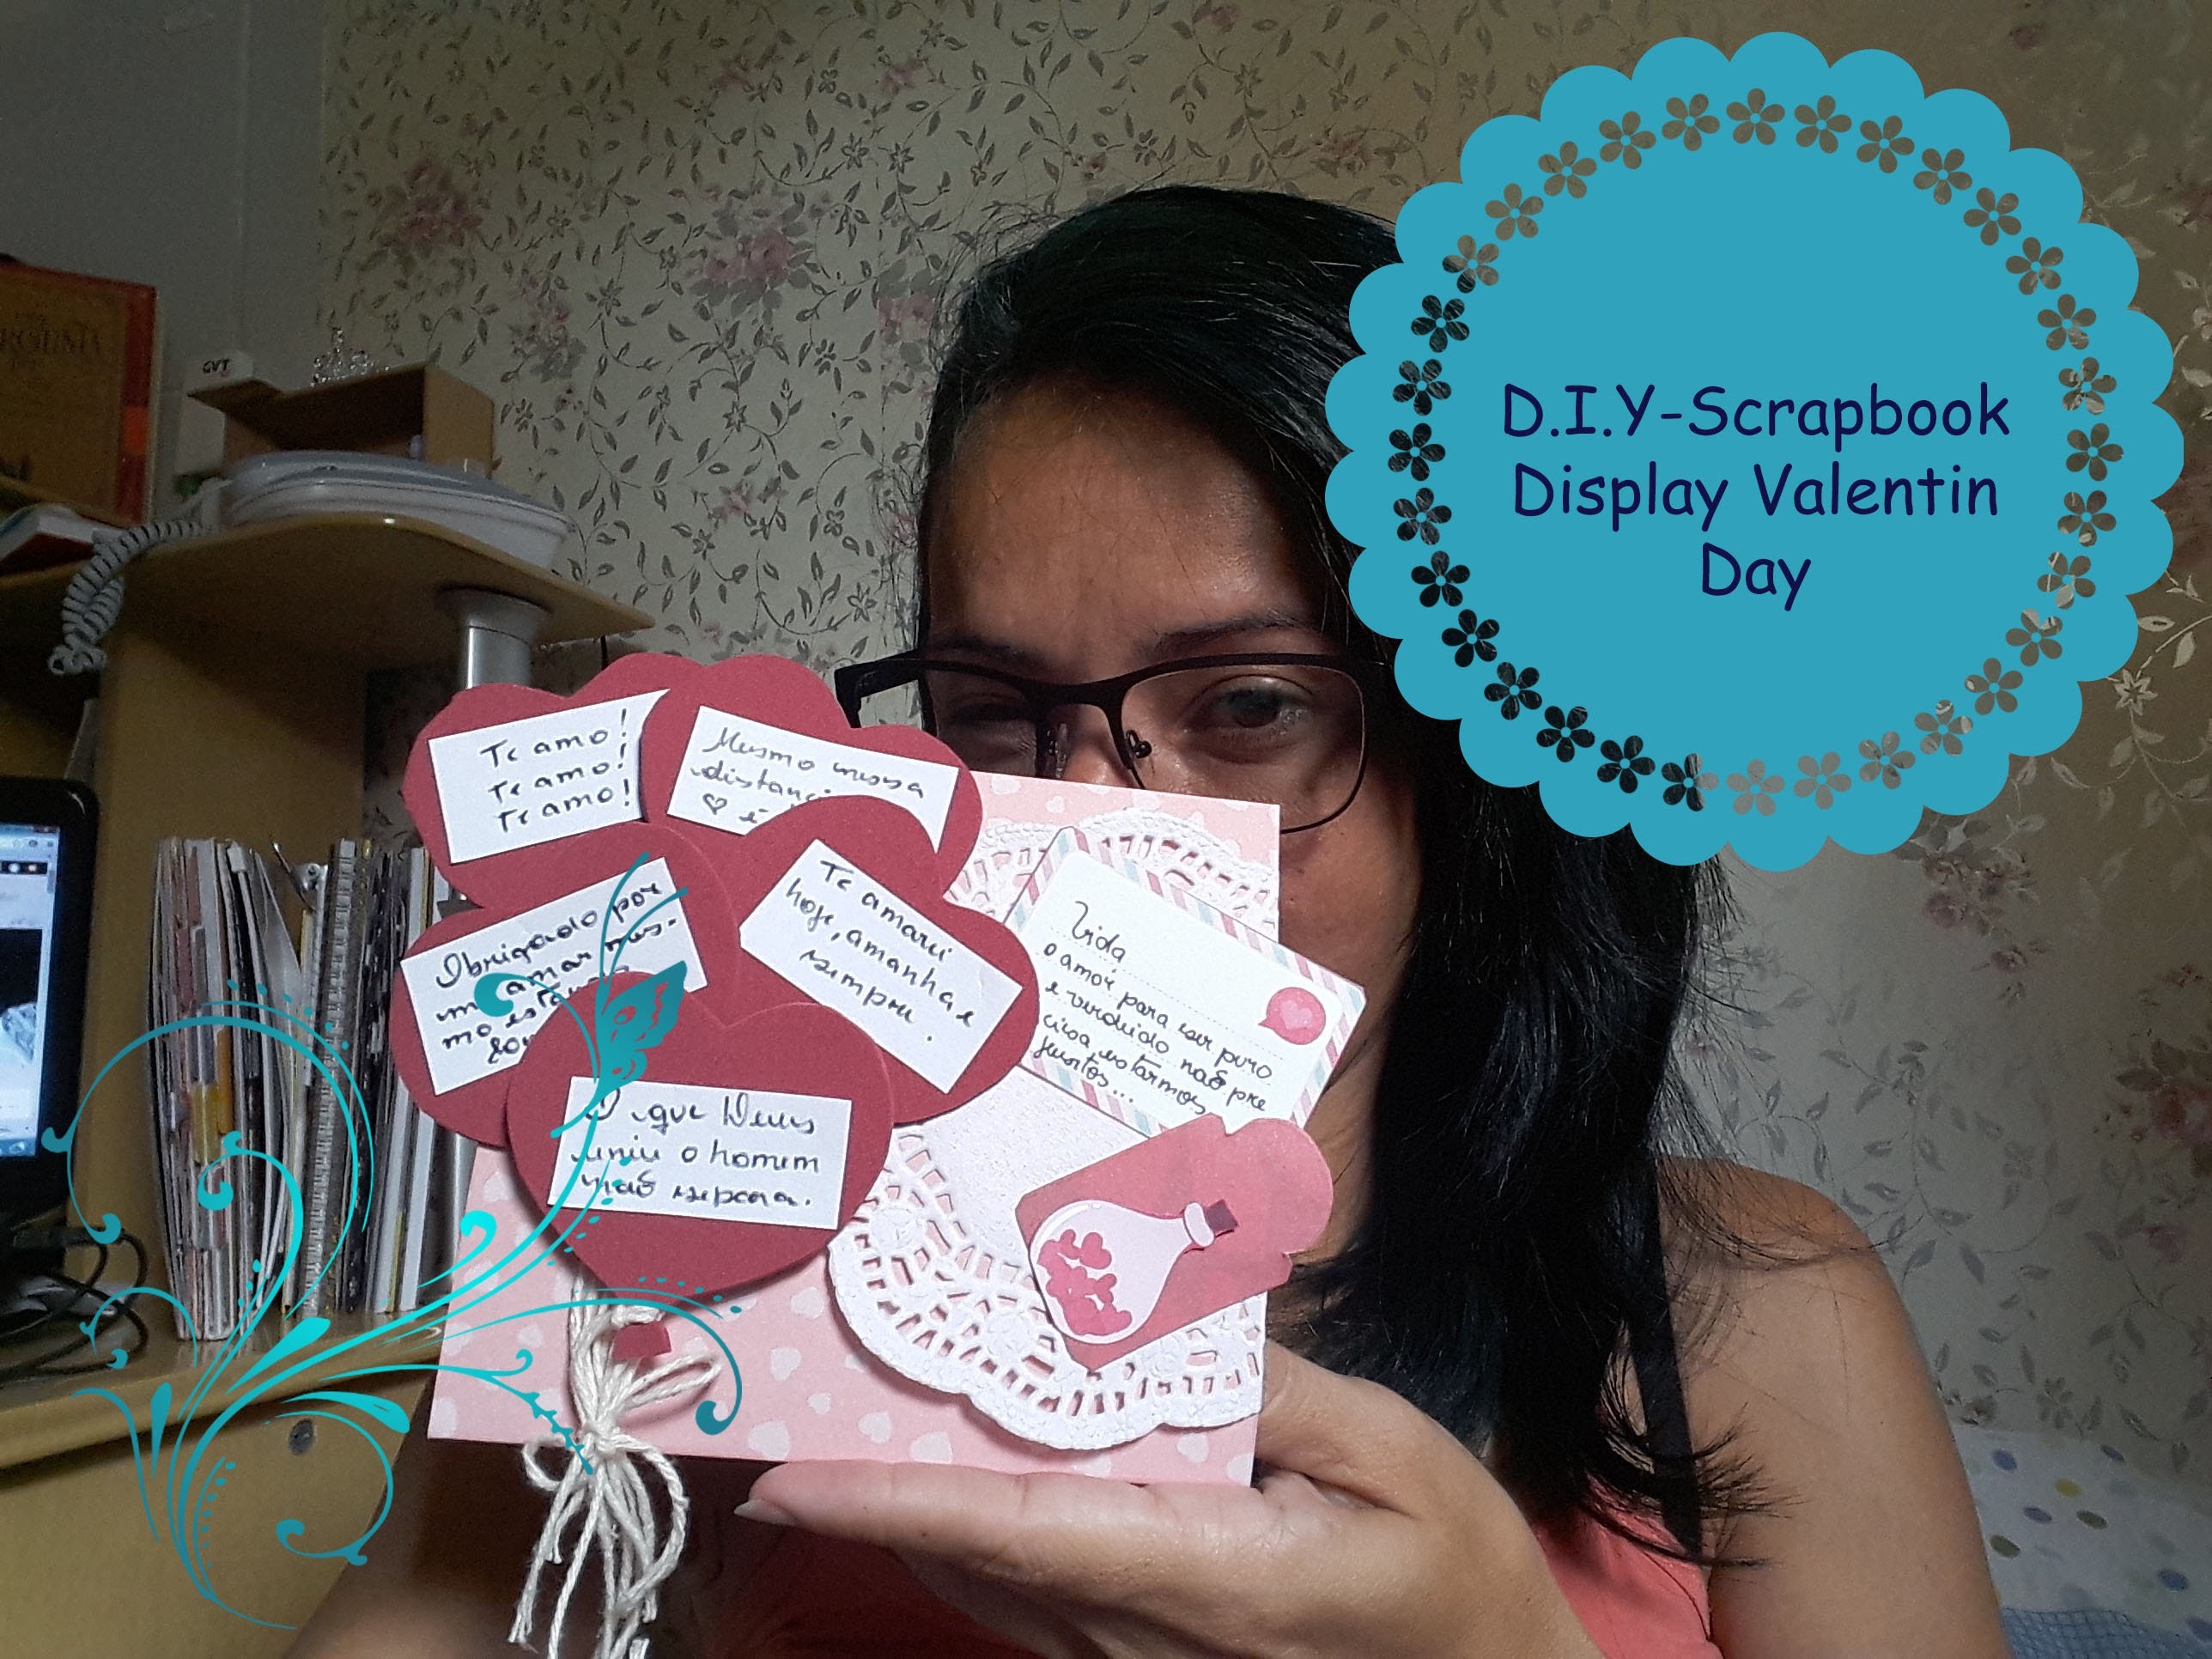 D.I.Y. Scrapbook Display Valentin Day